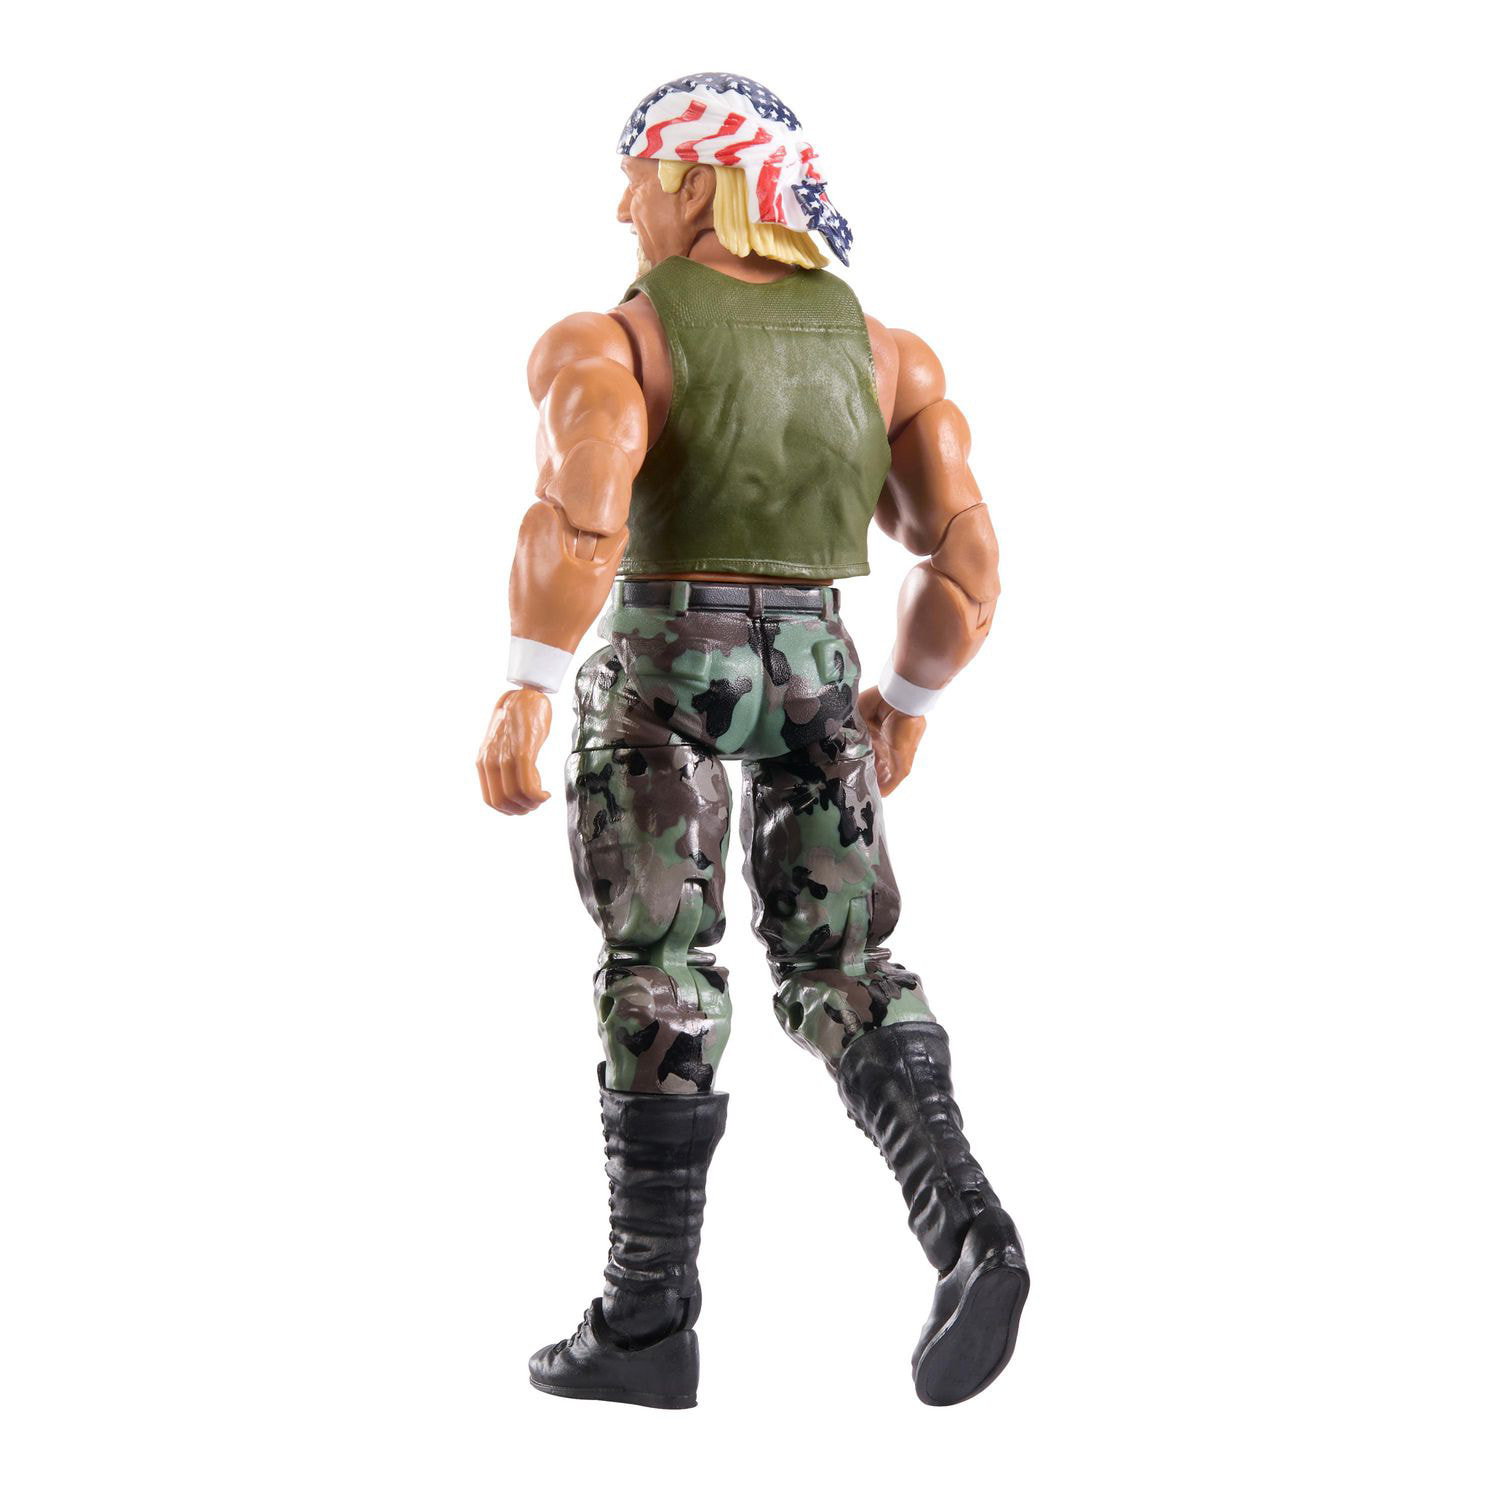 WWE Elite Action Figure SummerSlam Hulk Hogan with Build-A-Figure 